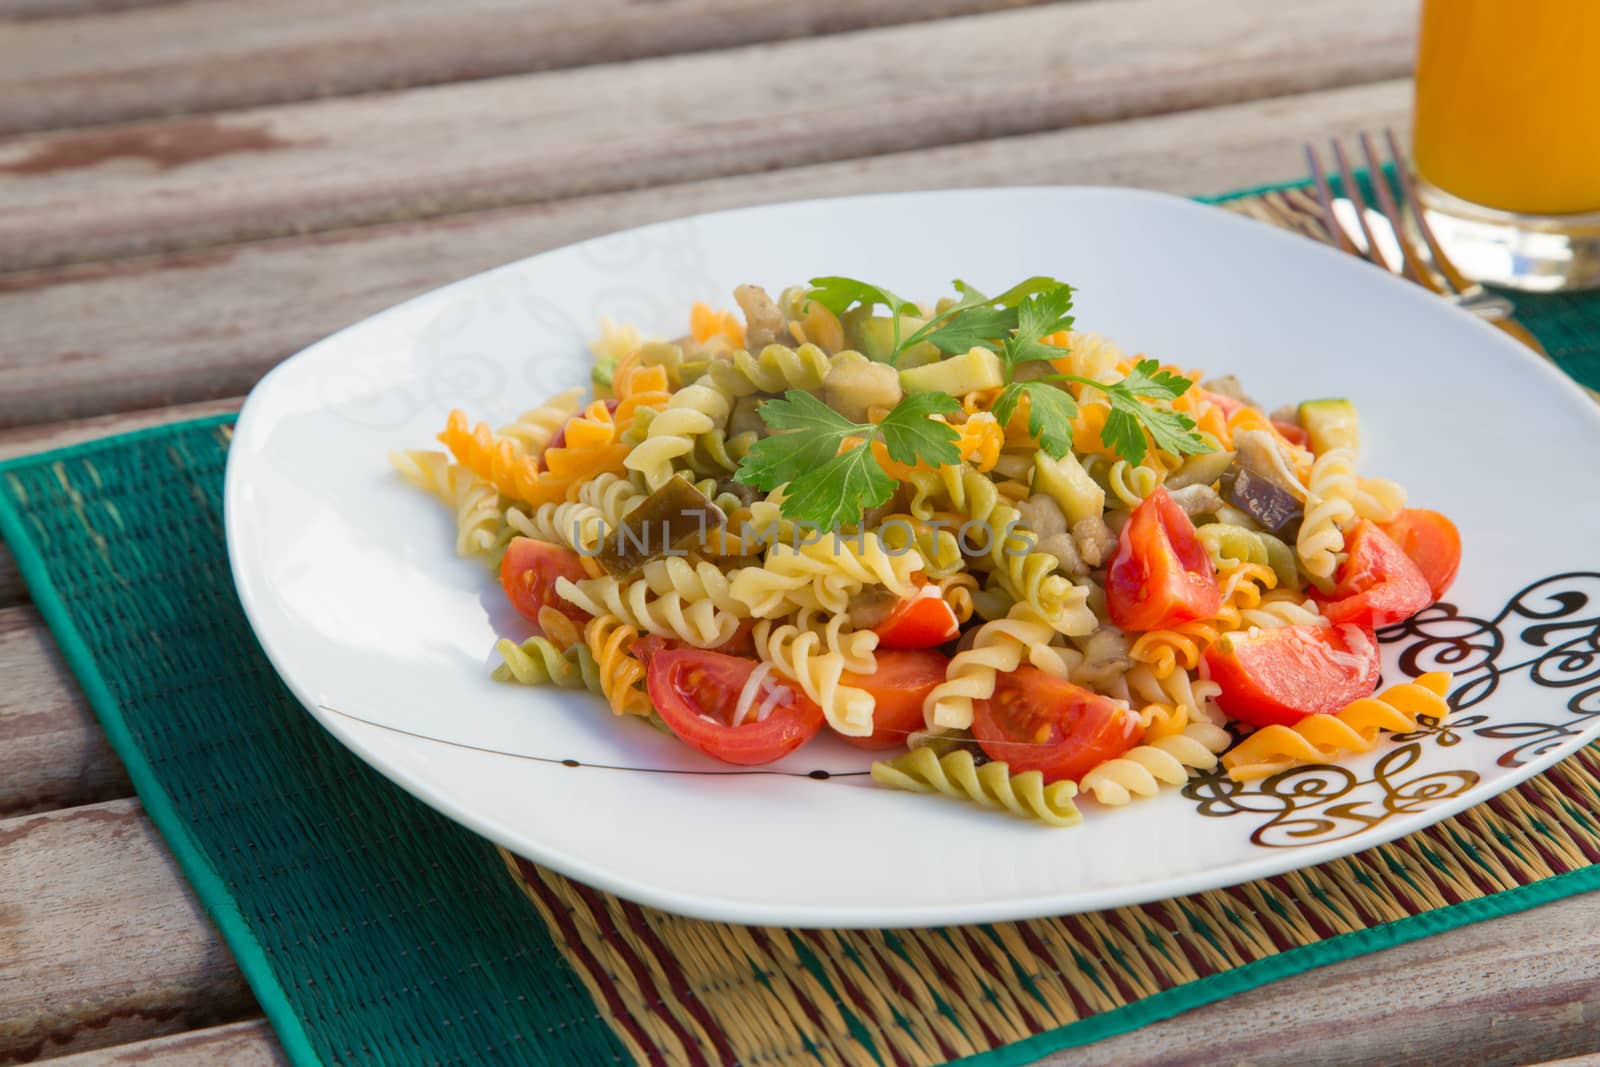 Pasta primavera prepared with three-coloured pasta and vegetables.